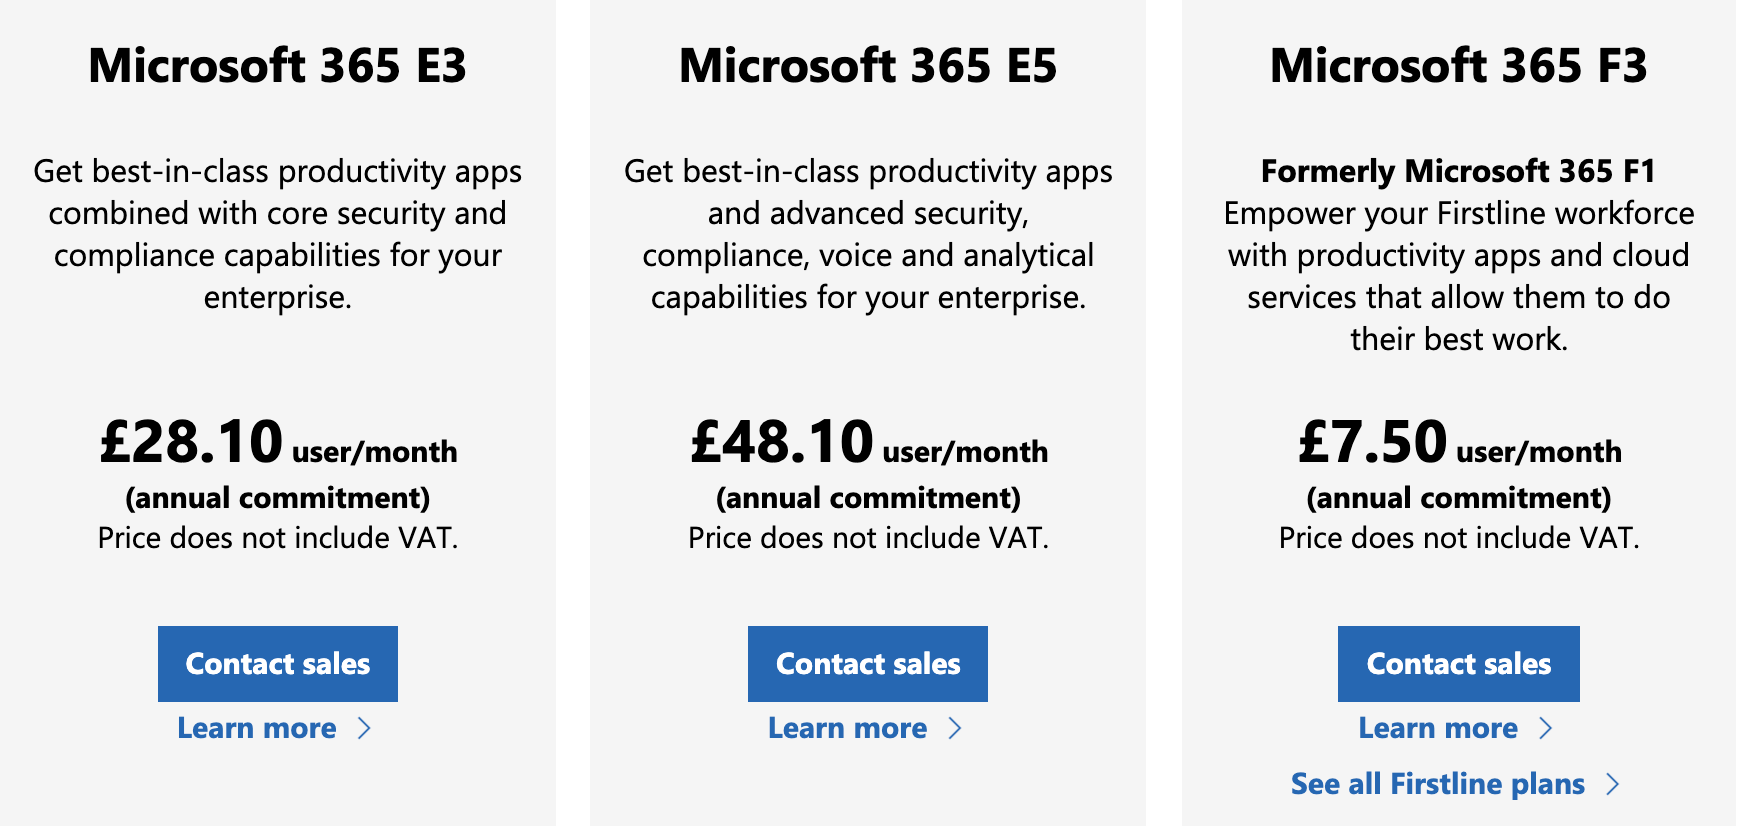 Microsoft 365 Enterprise E3 pricing and plans